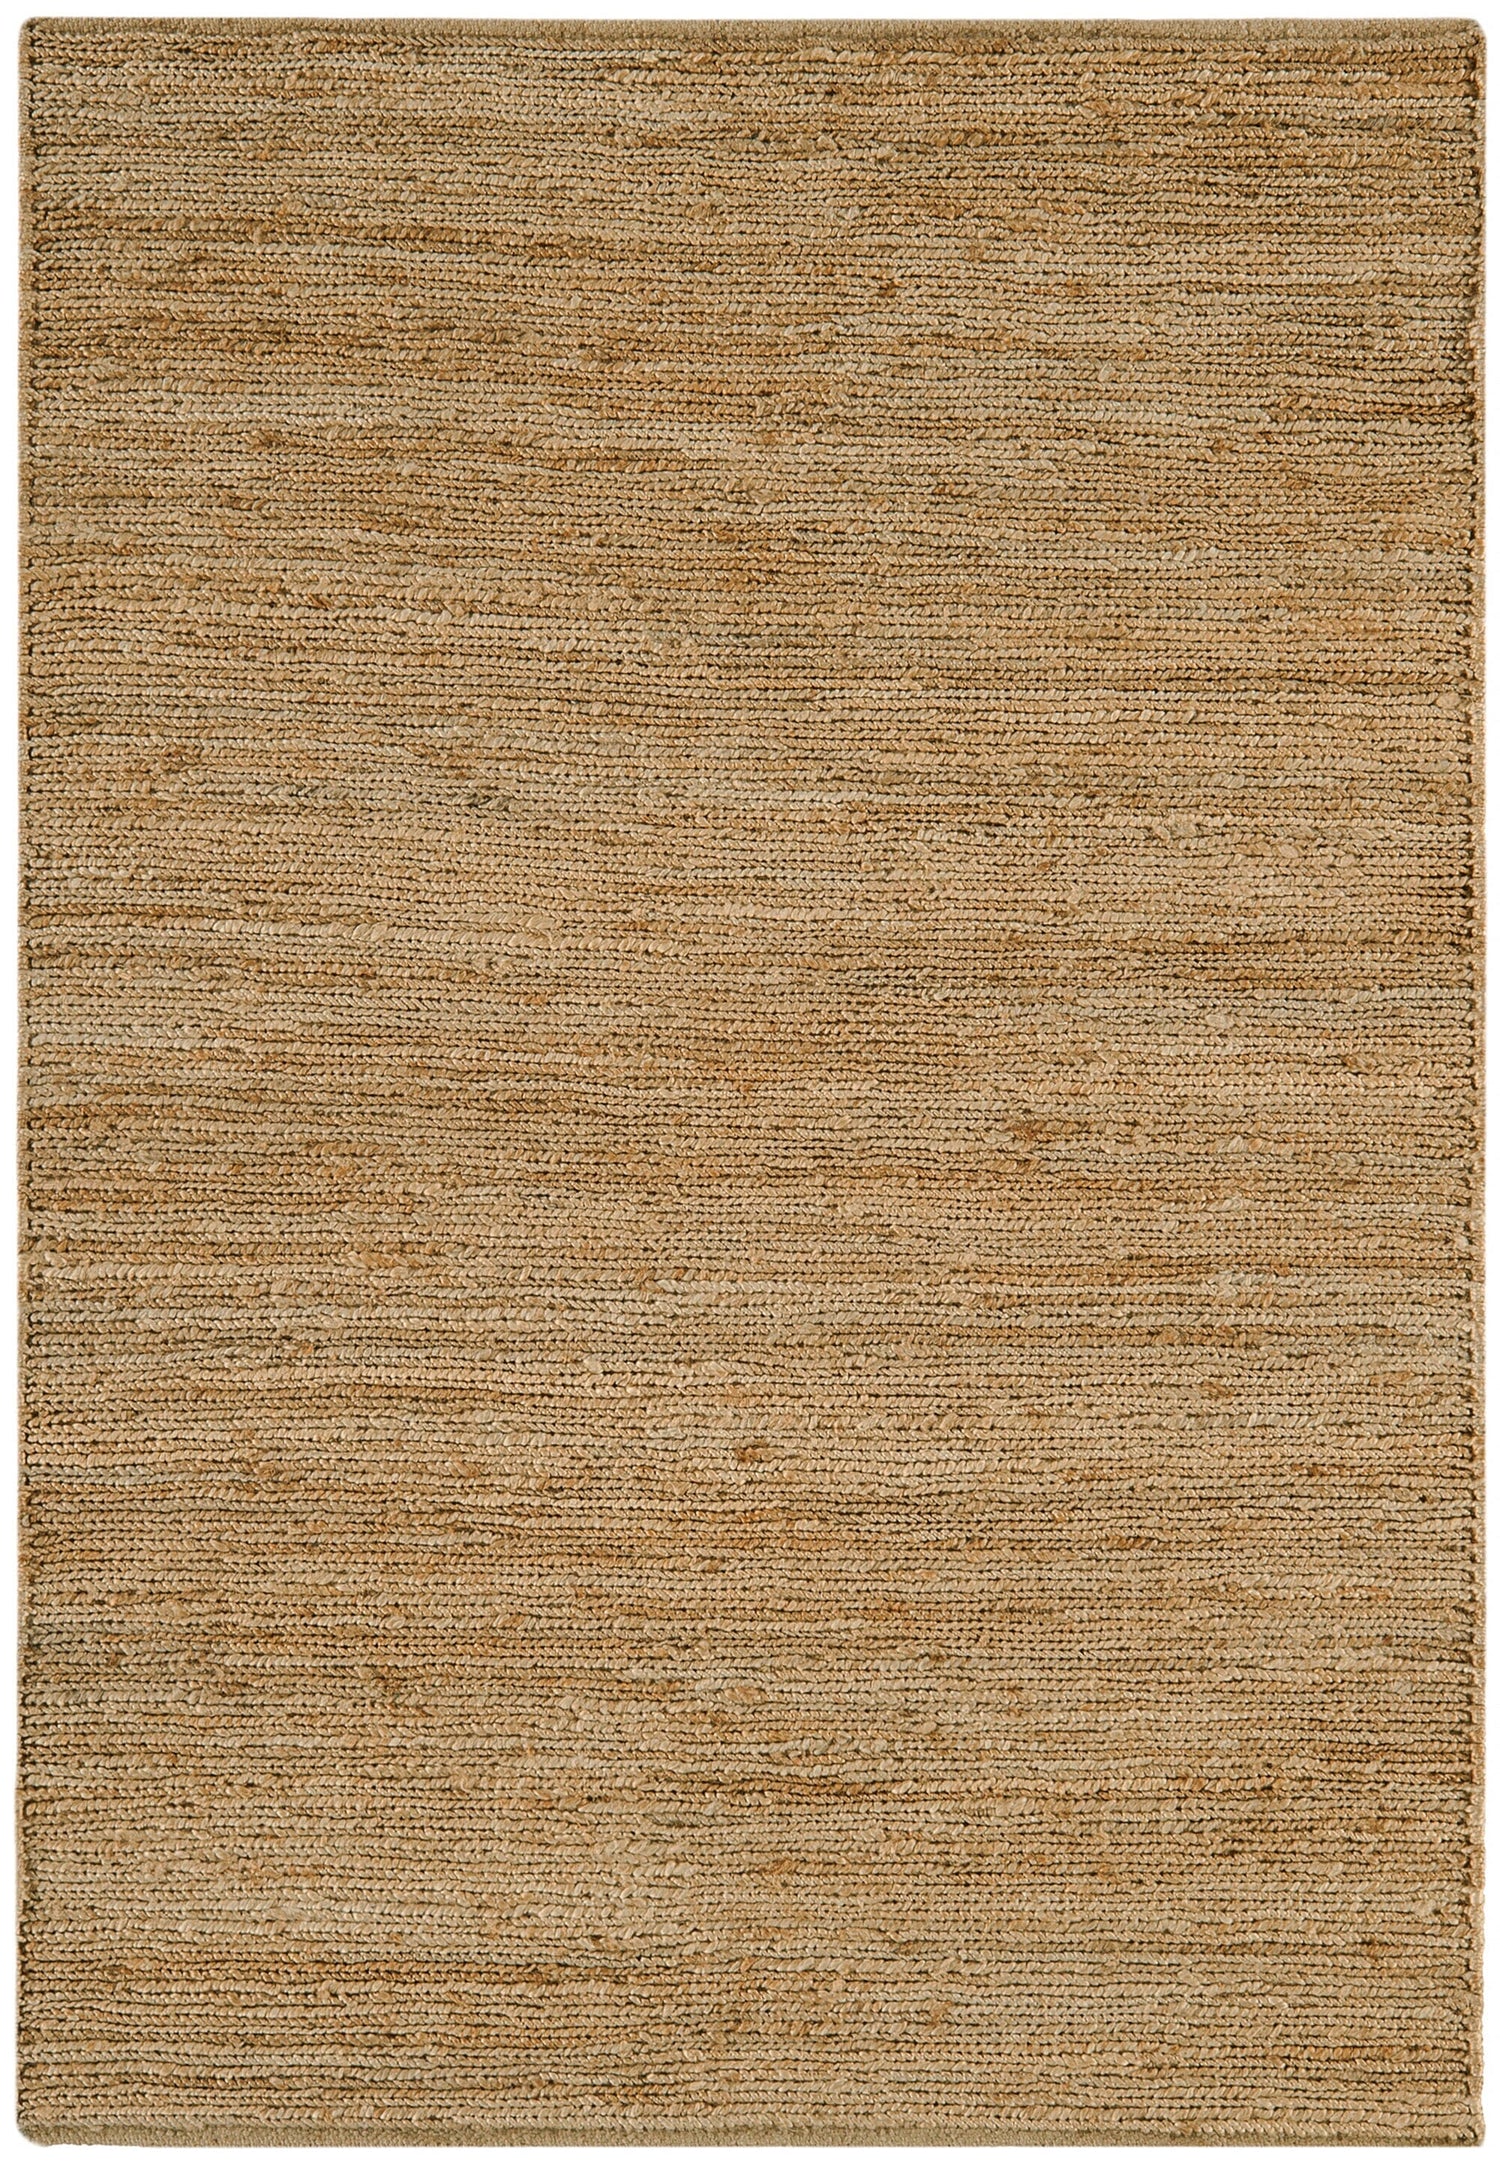  Asiatic Carpets-Asiatic Carpets Soumak Hand Woven Rug Natural - 160 x 230cm-Beige, Natural 093 